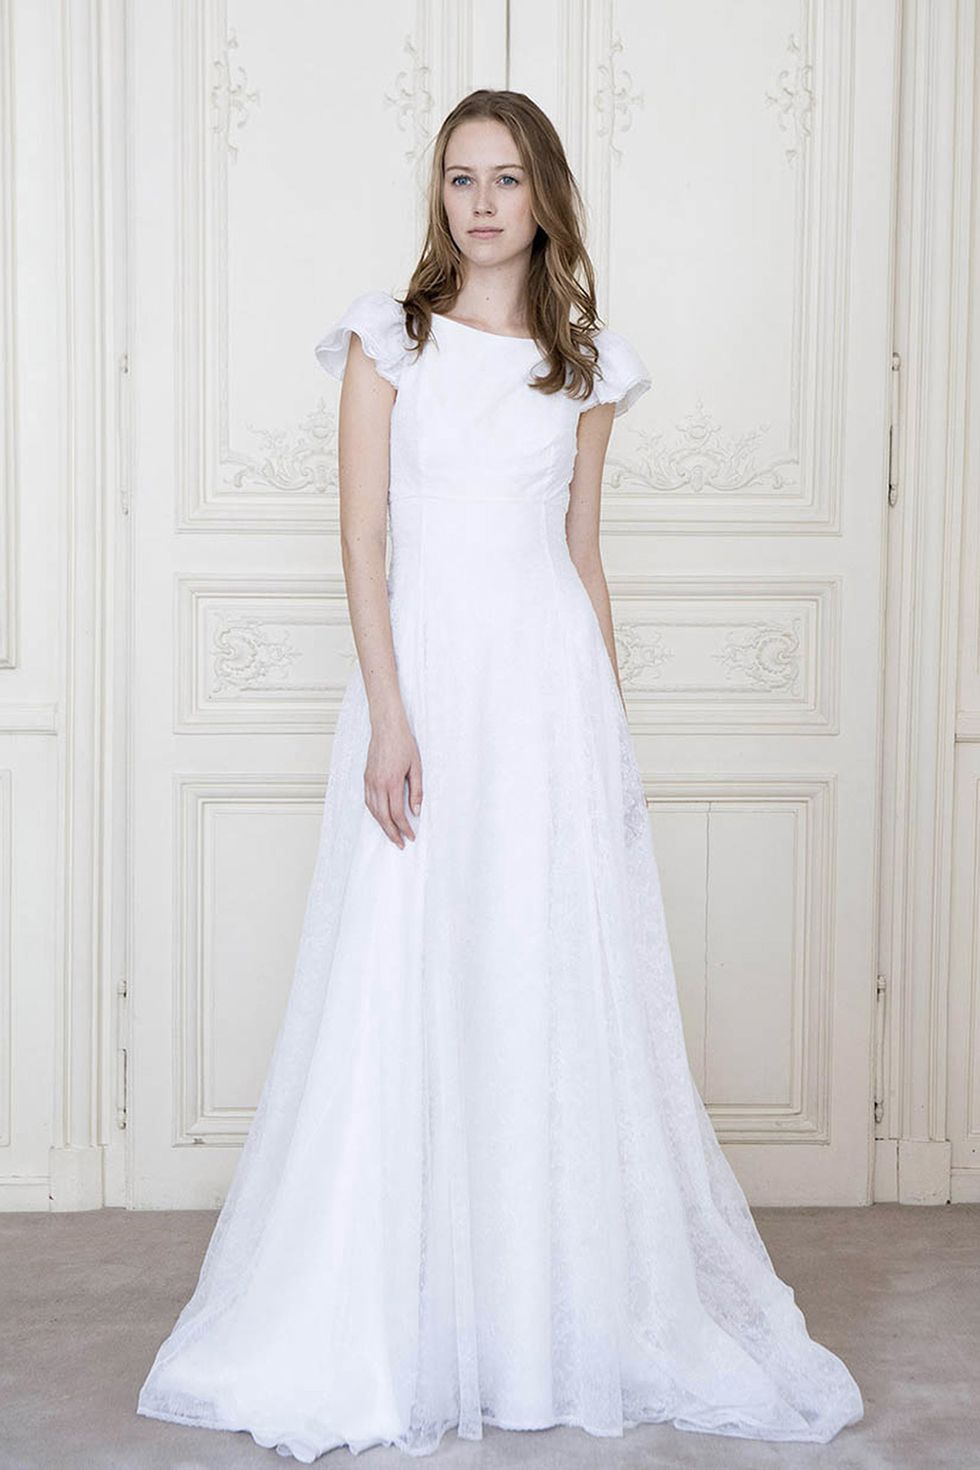 27 Wedding Dress Ideas for Pippa Middleton - Wedding Dress Ideas for ...